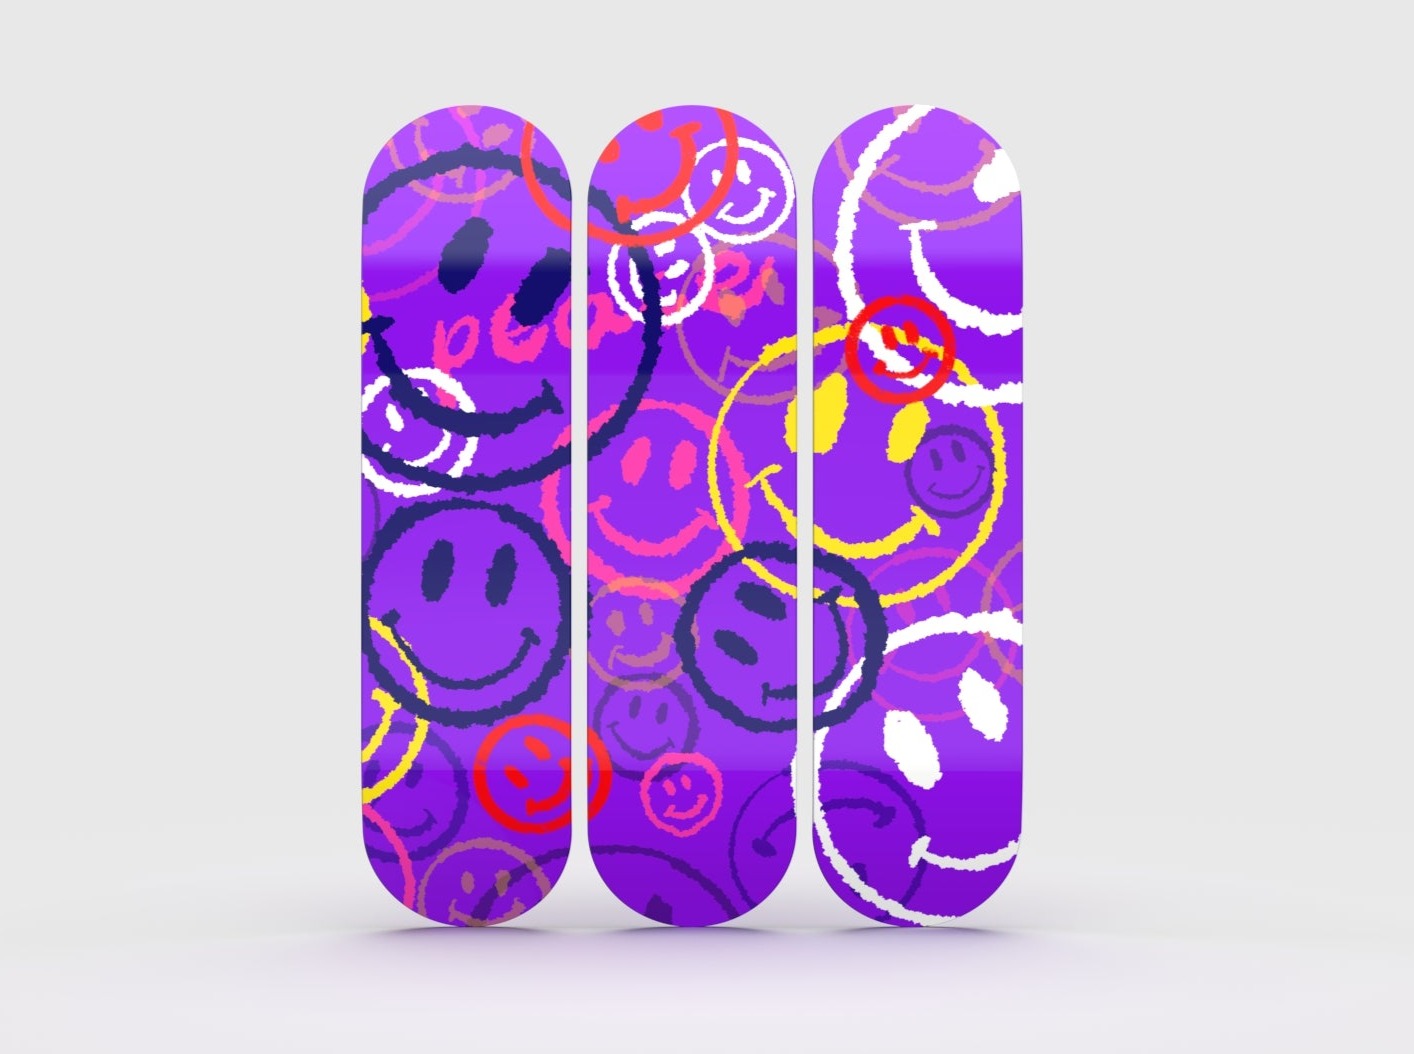 Wall Art of Smiley Party Skateboard Design in Acrylic Glass - Pop Art